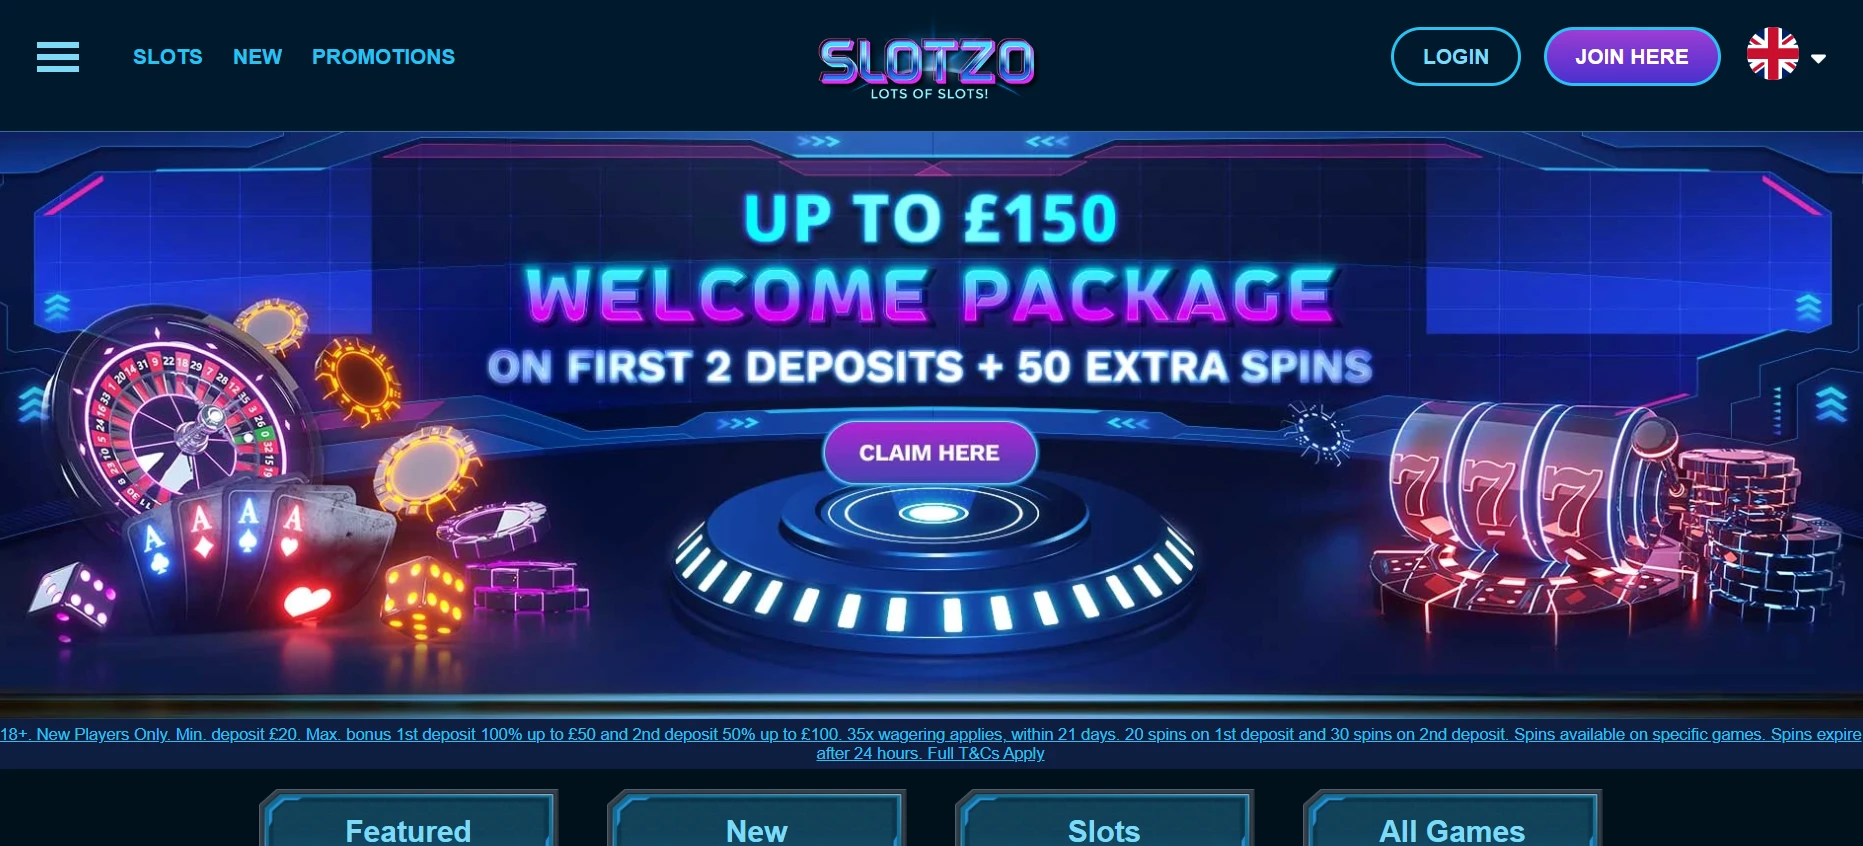 Slotzo Casino Welcome Offer